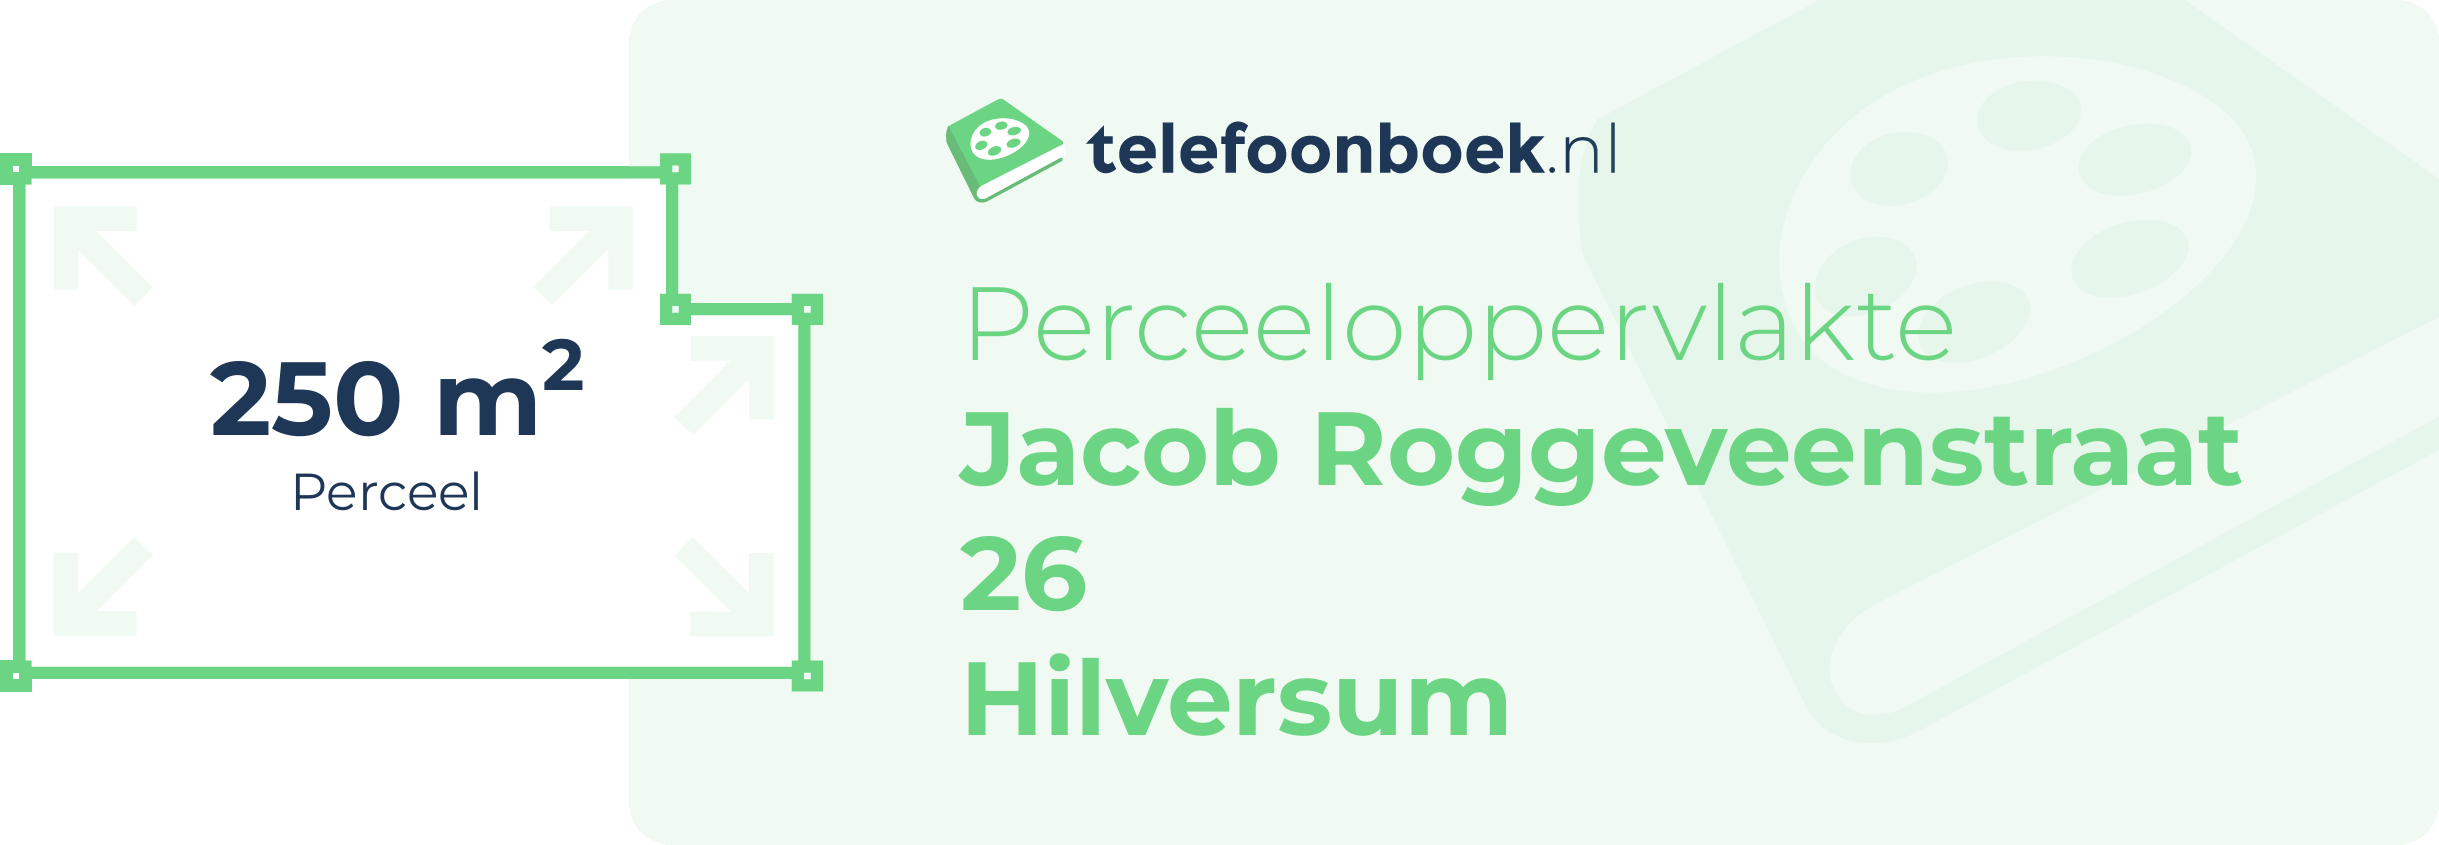 Perceeloppervlakte Jacob Roggeveenstraat 26 Hilversum